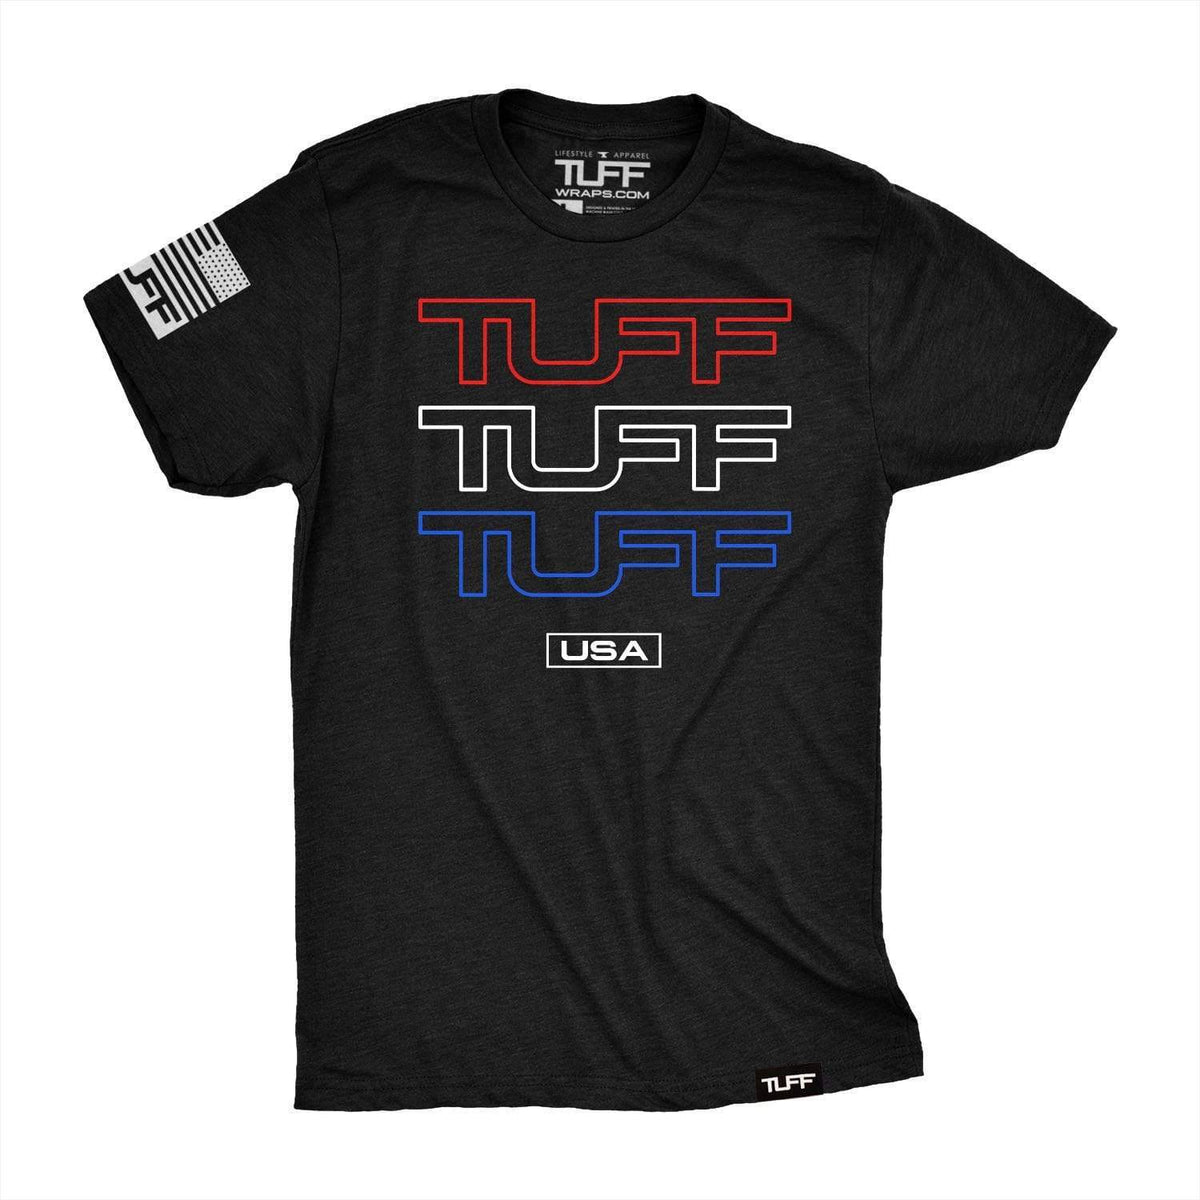 Triple TUFF USA Tee T-shirt